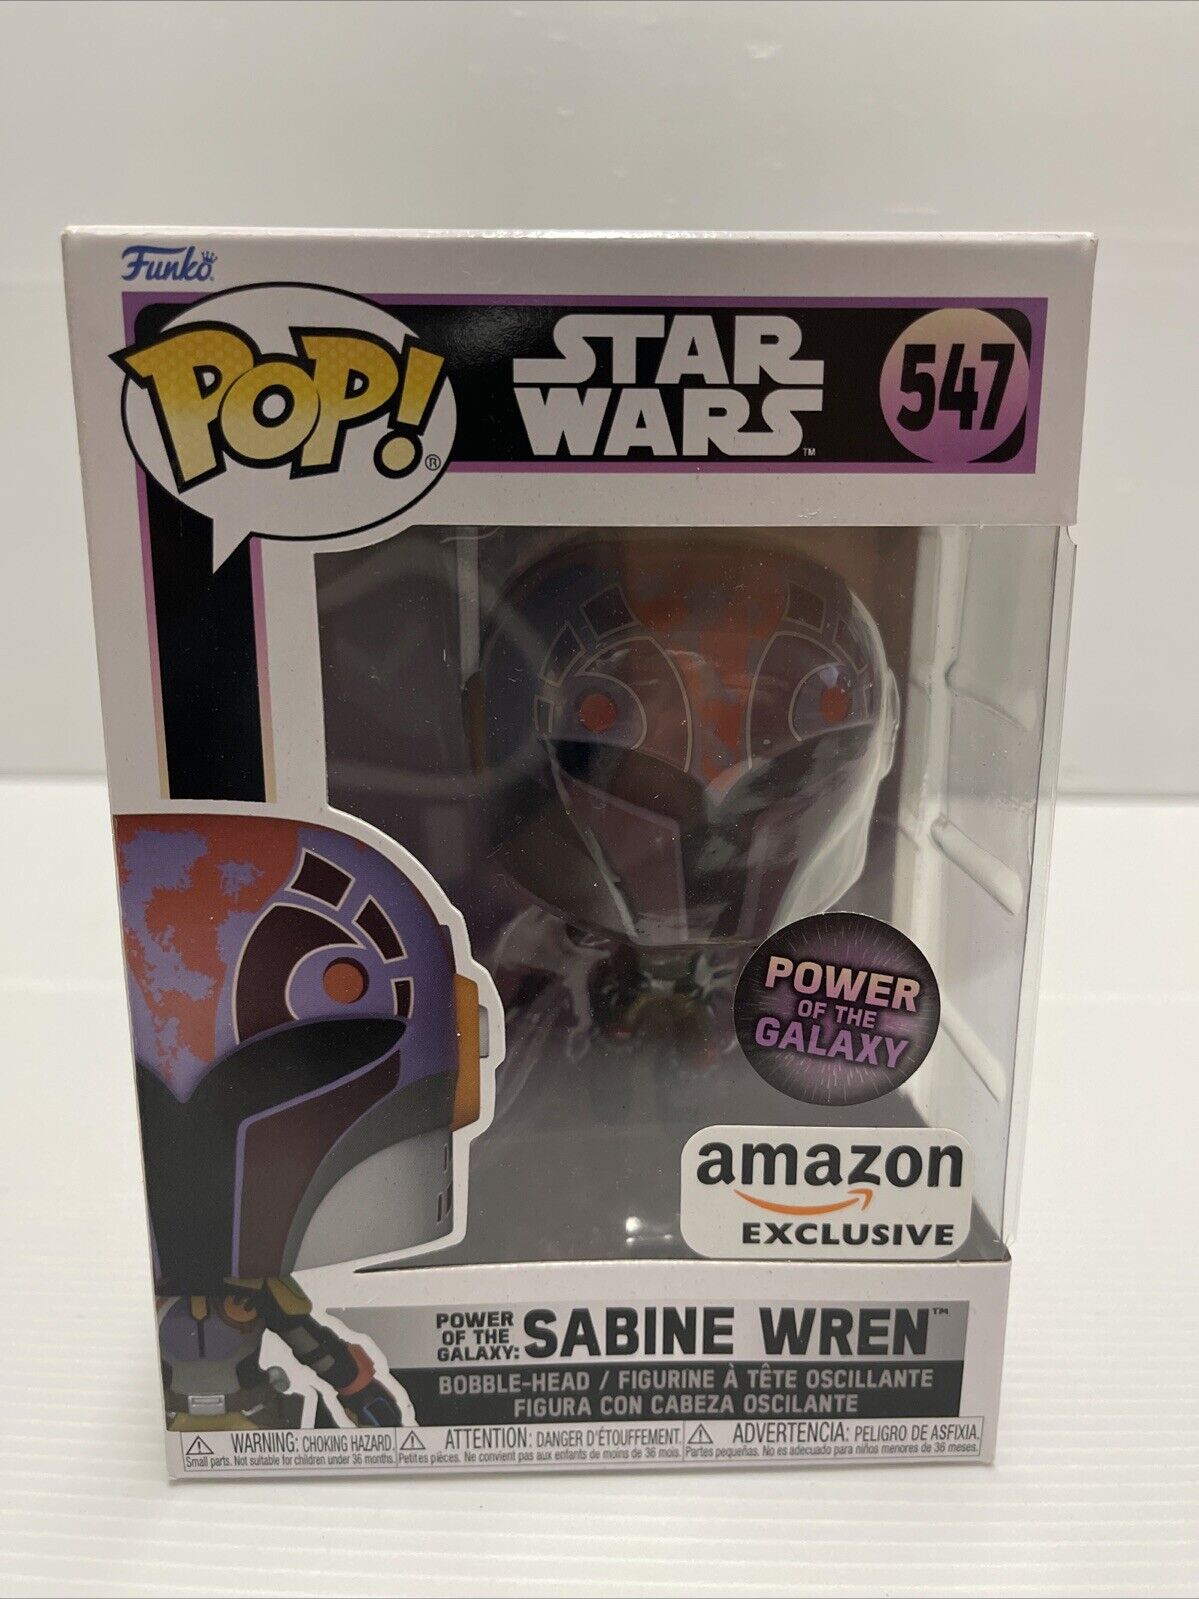 Funko Pop Star Wars #547 Sabine Wren Amazon Exclusive Power of the Galaxy POTG